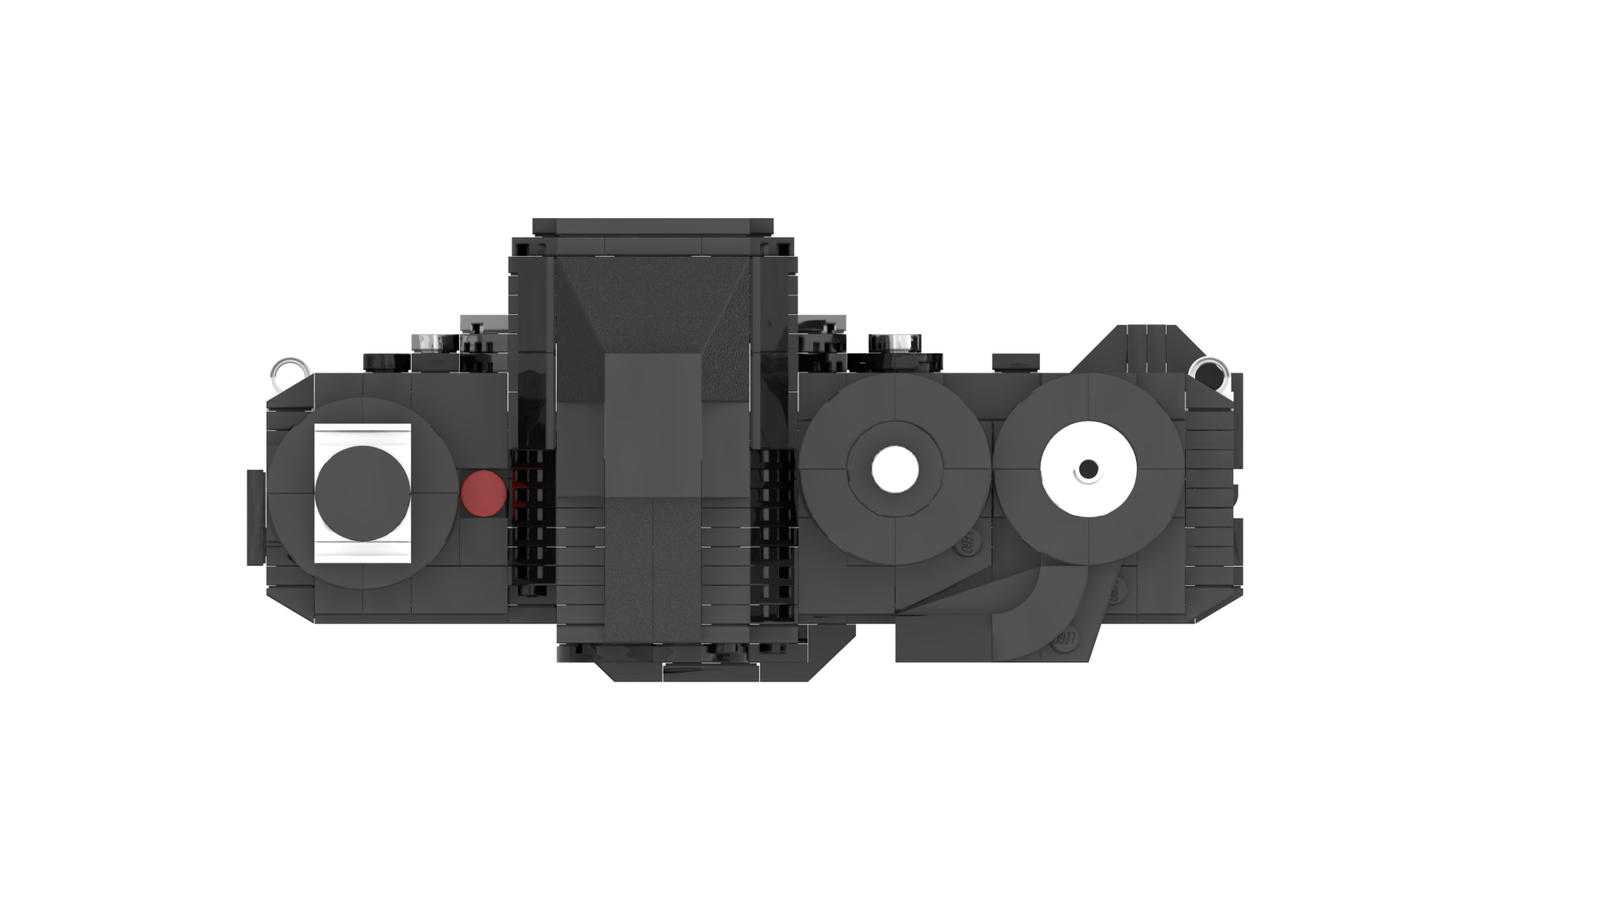 Support this Lego Nikon F3 film SLR camera at Ideas.Lego - Nikon Rumors